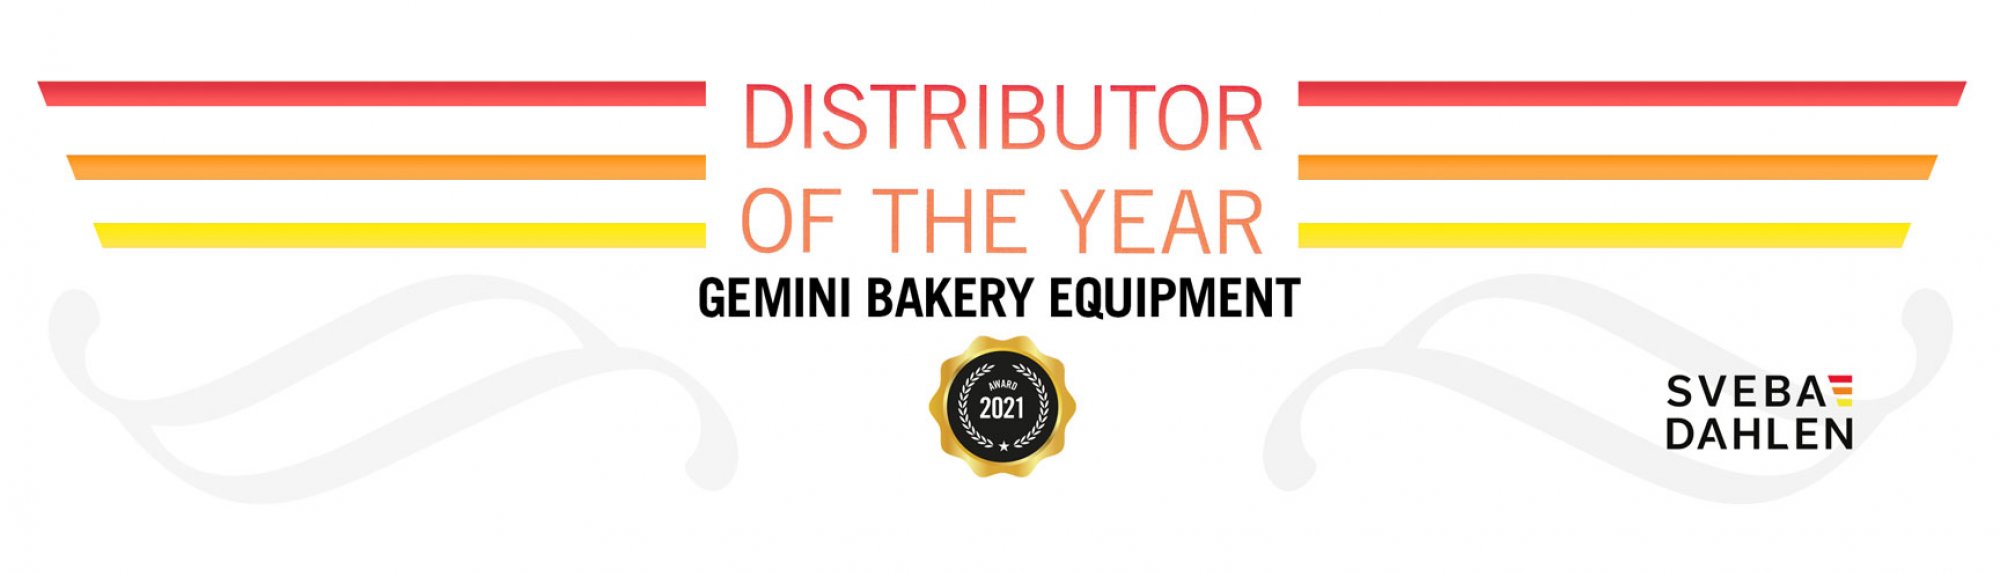 Sveba Dahlen distributor of the year 2021 is Gemini bakery equipment! 